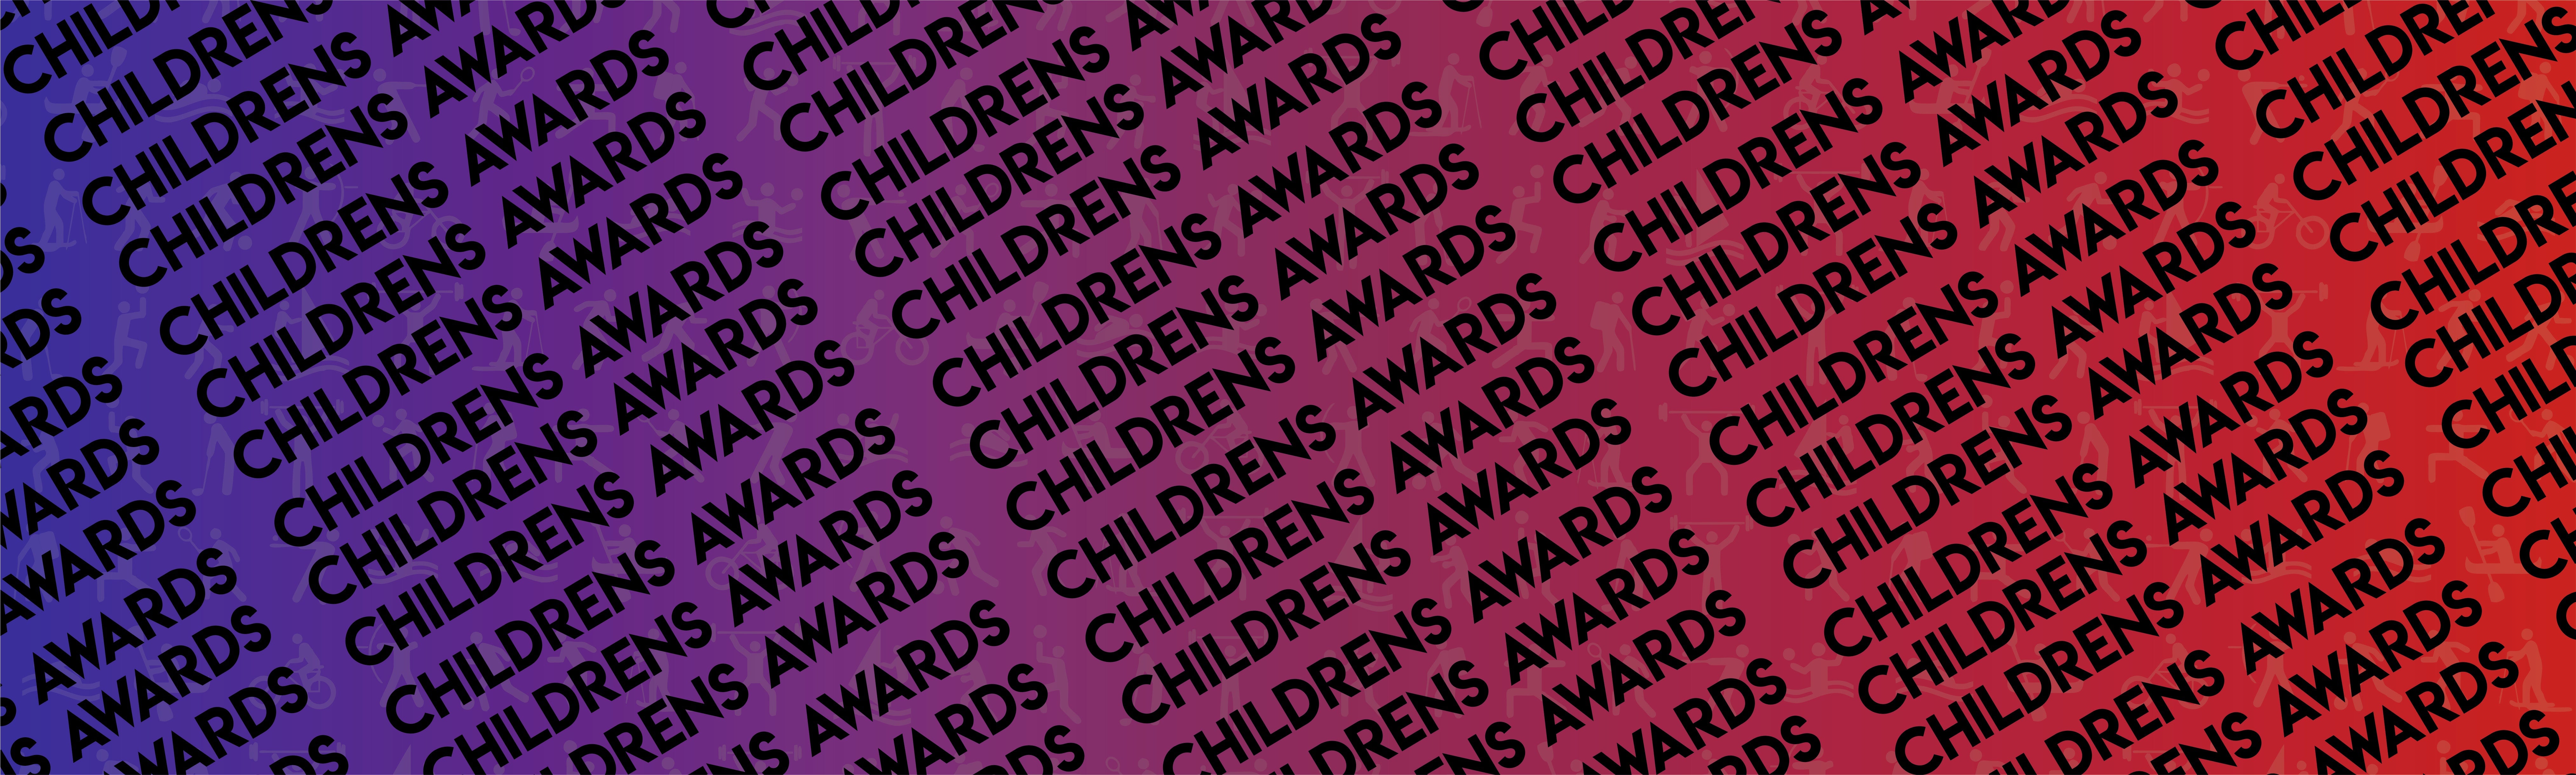 Childrens Awards